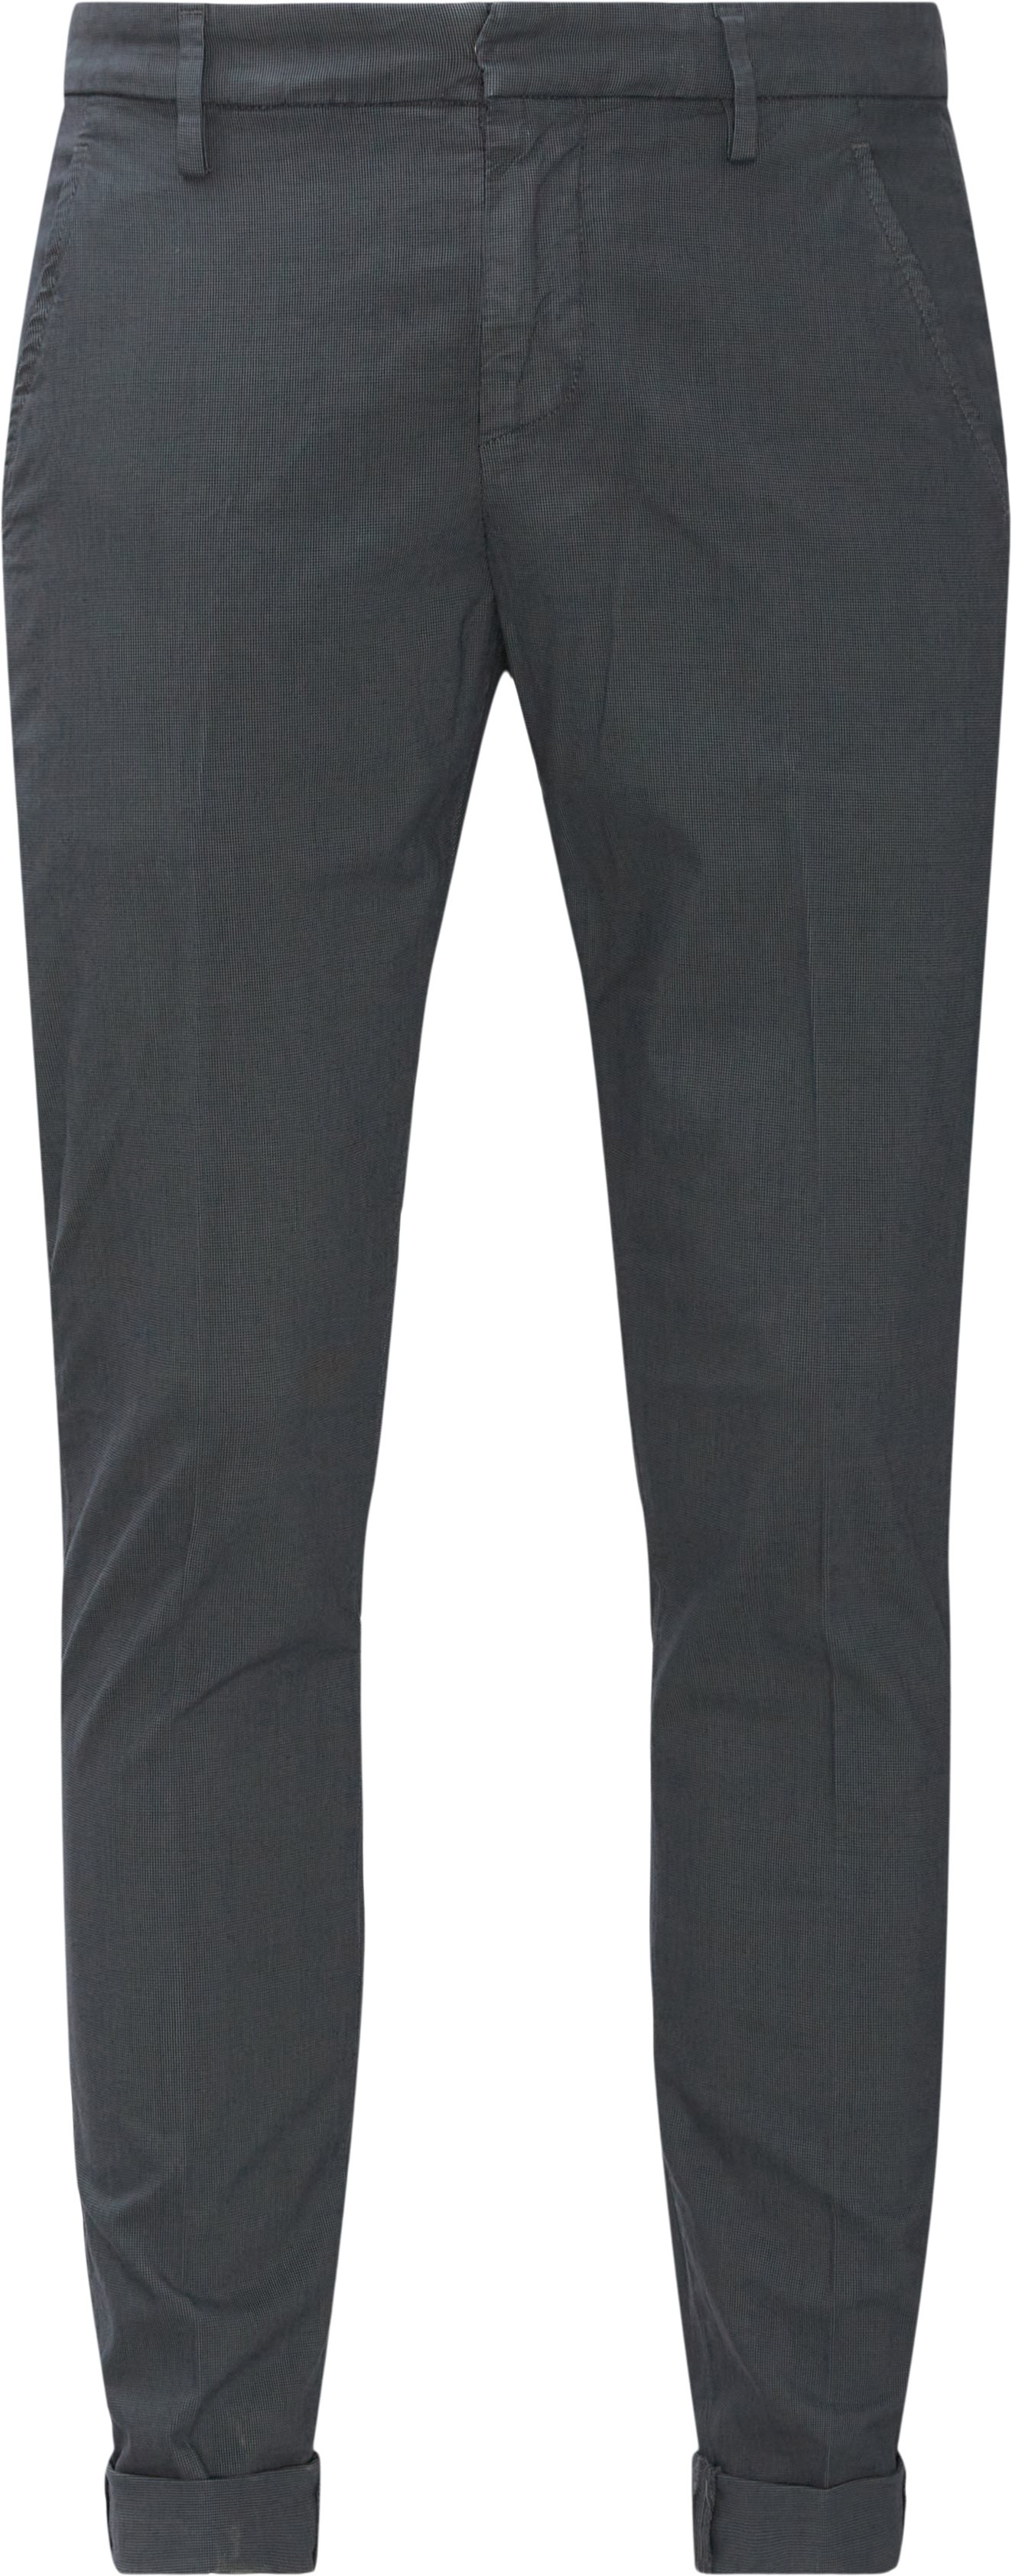 Trousers - Slim fit - Grey